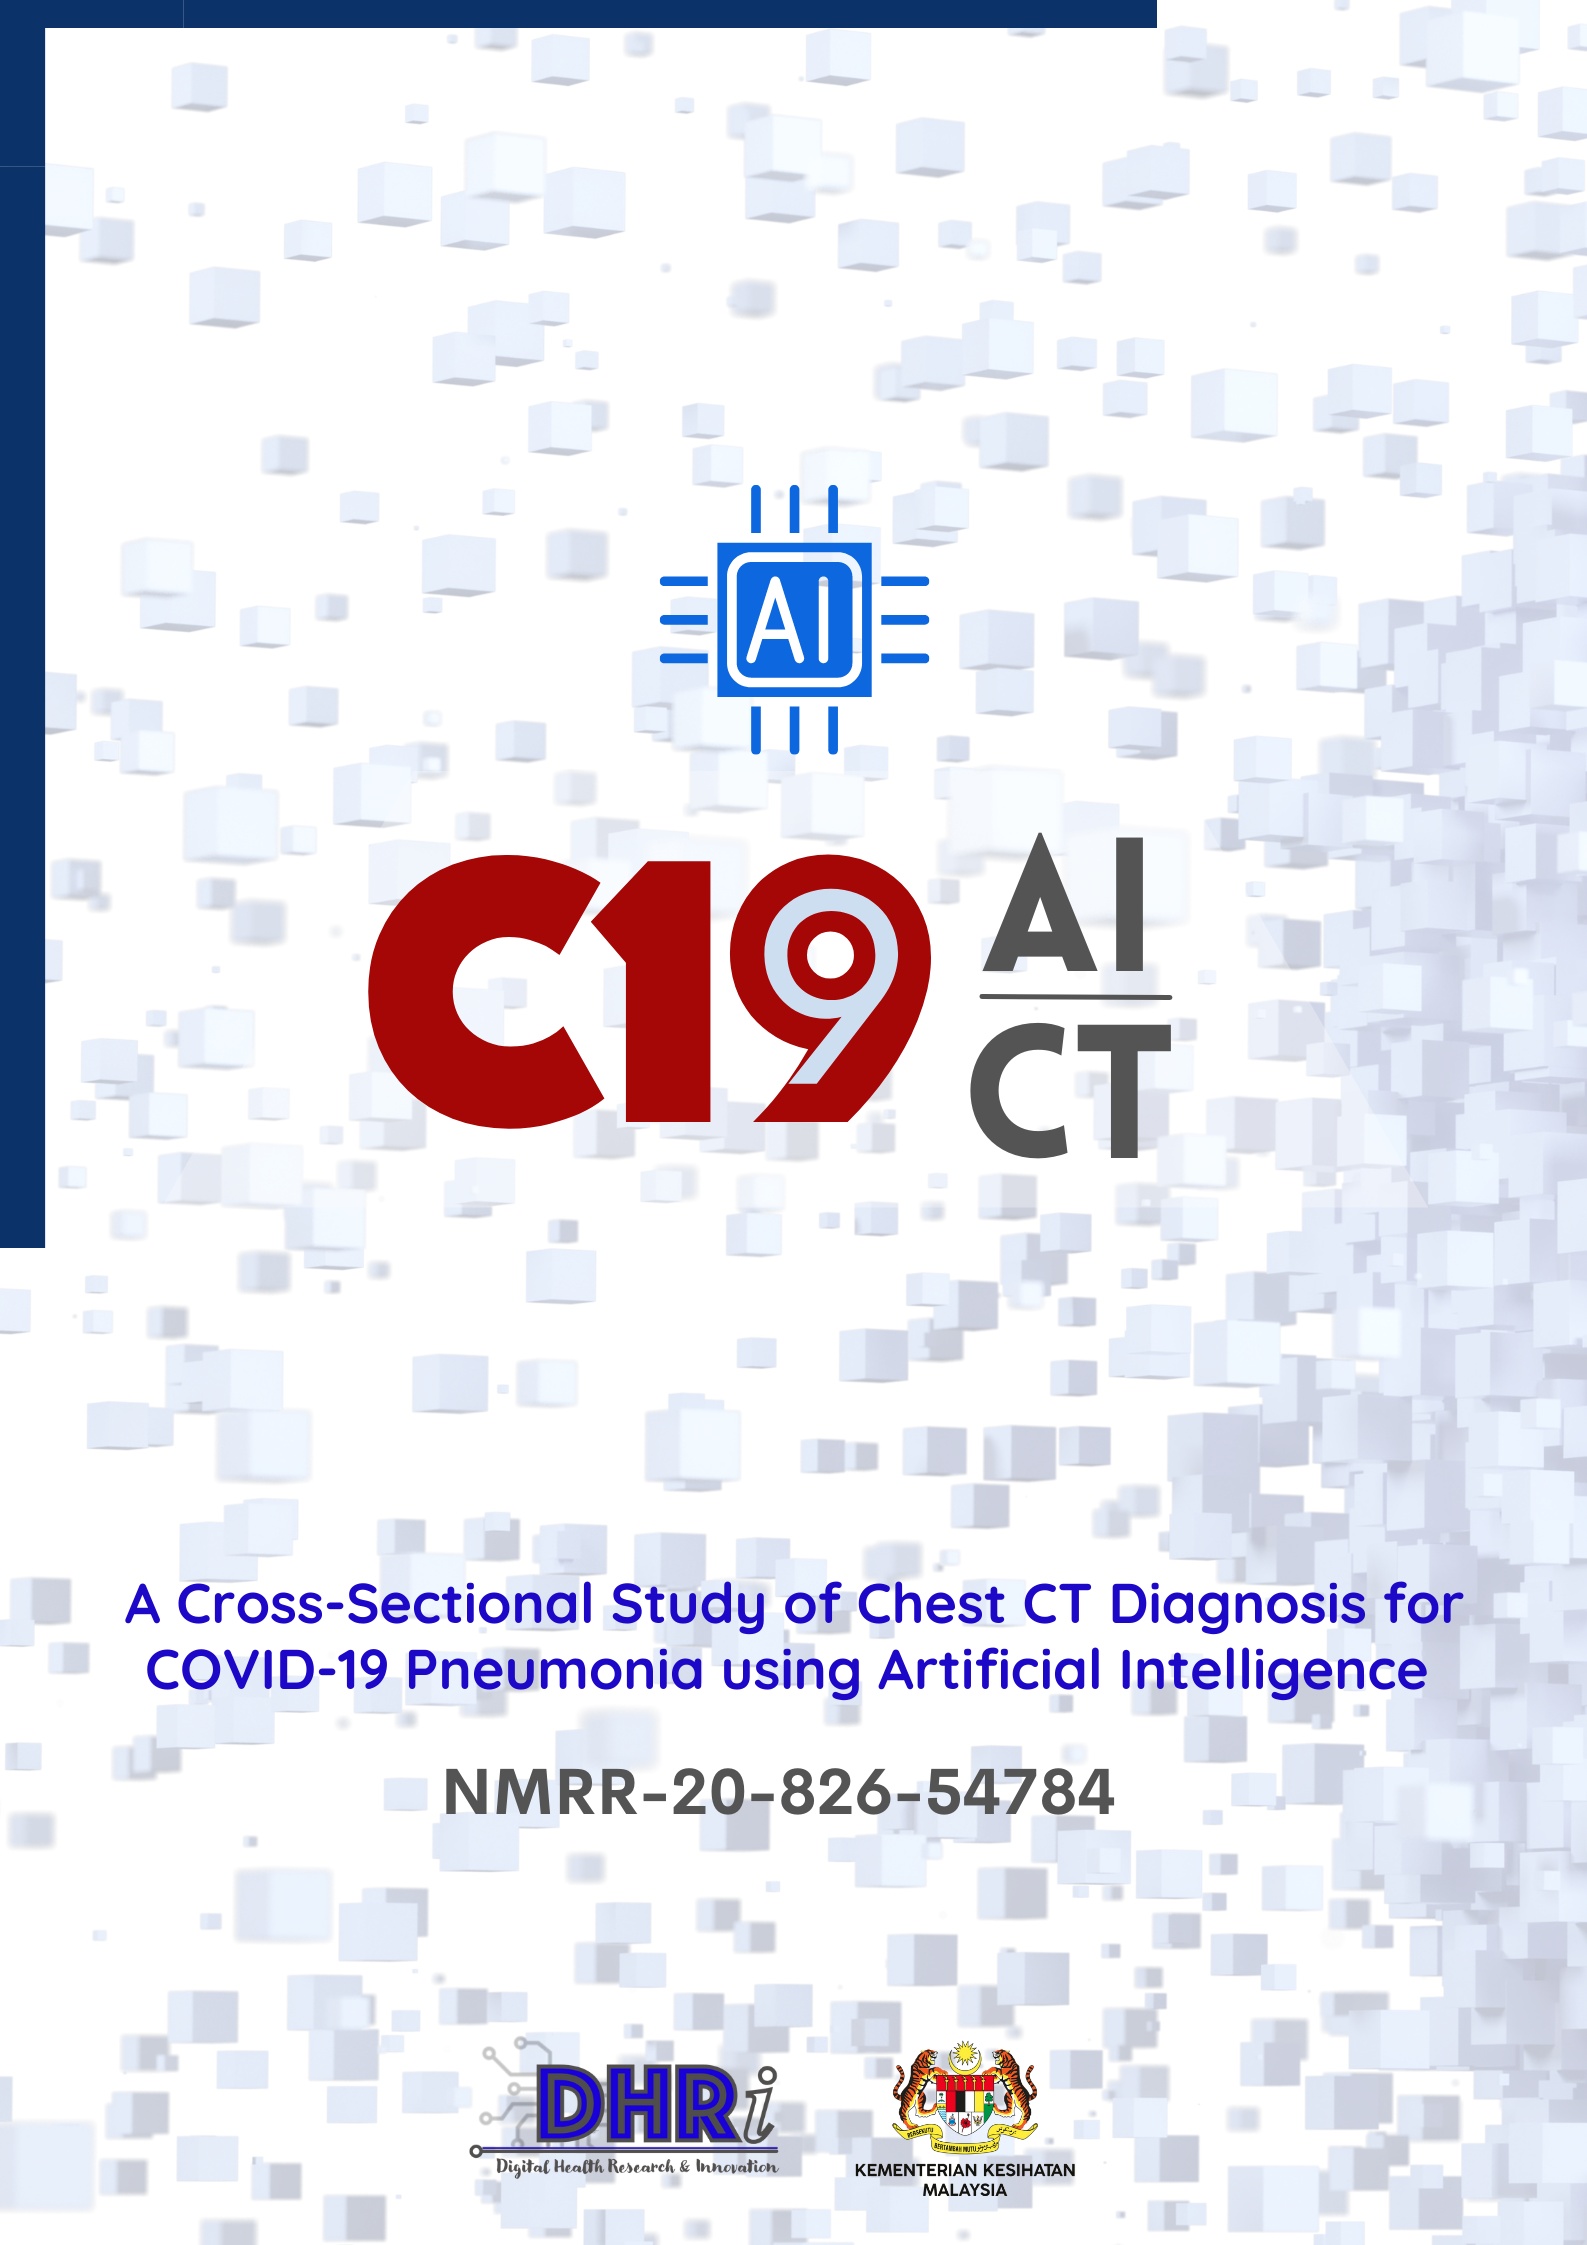 C19 AI-CT